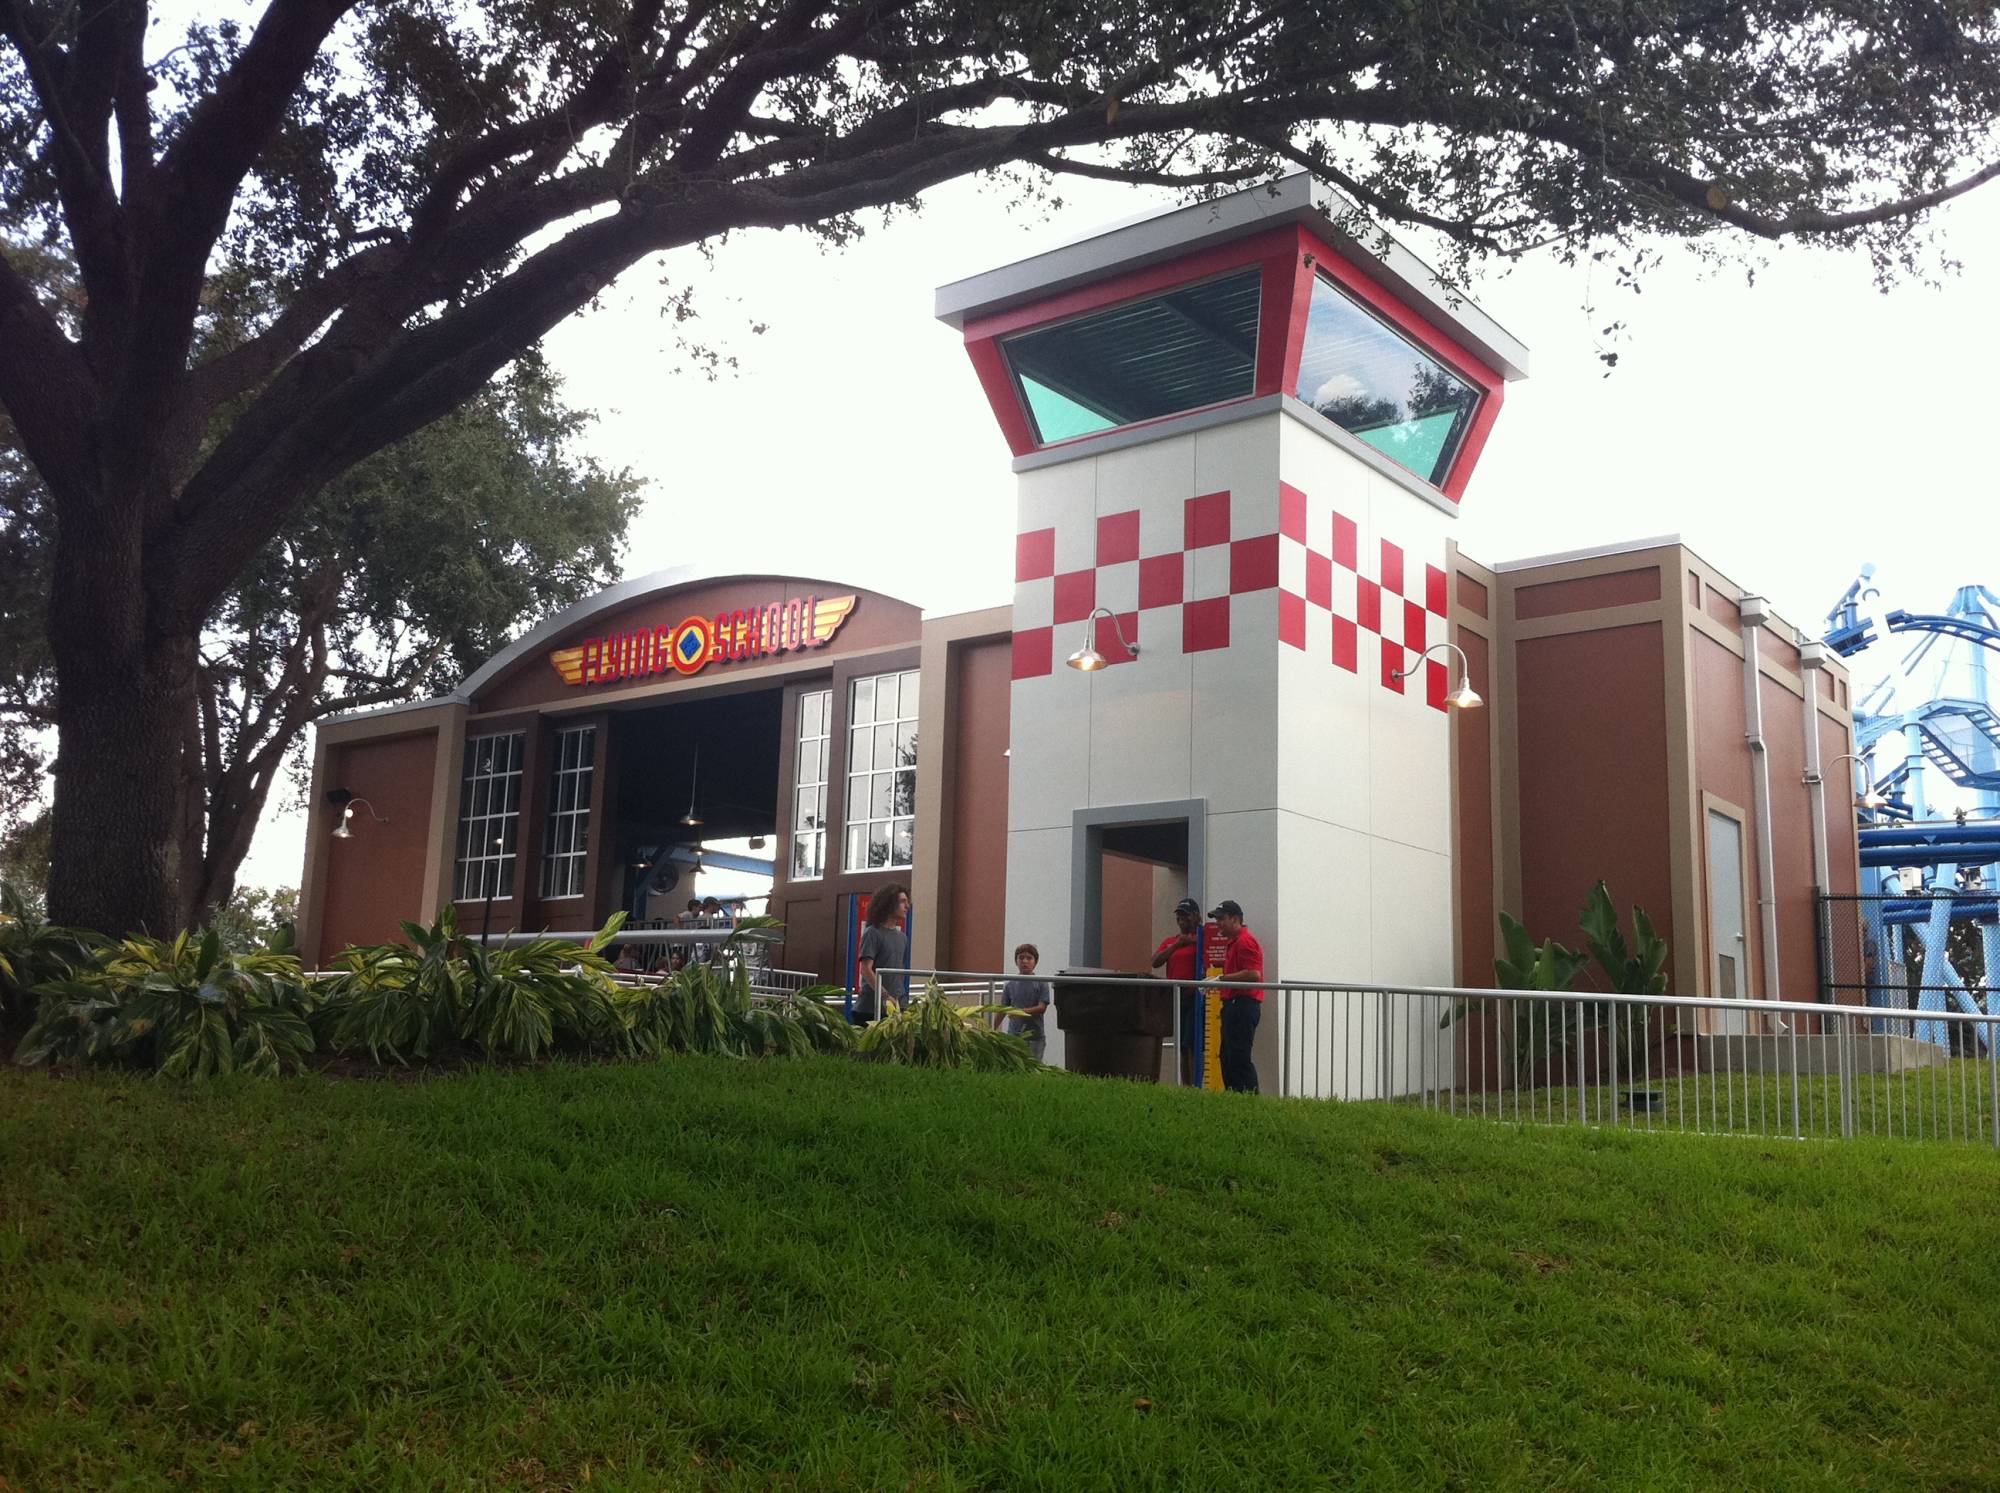 Flying School at LEGOLAND Florida